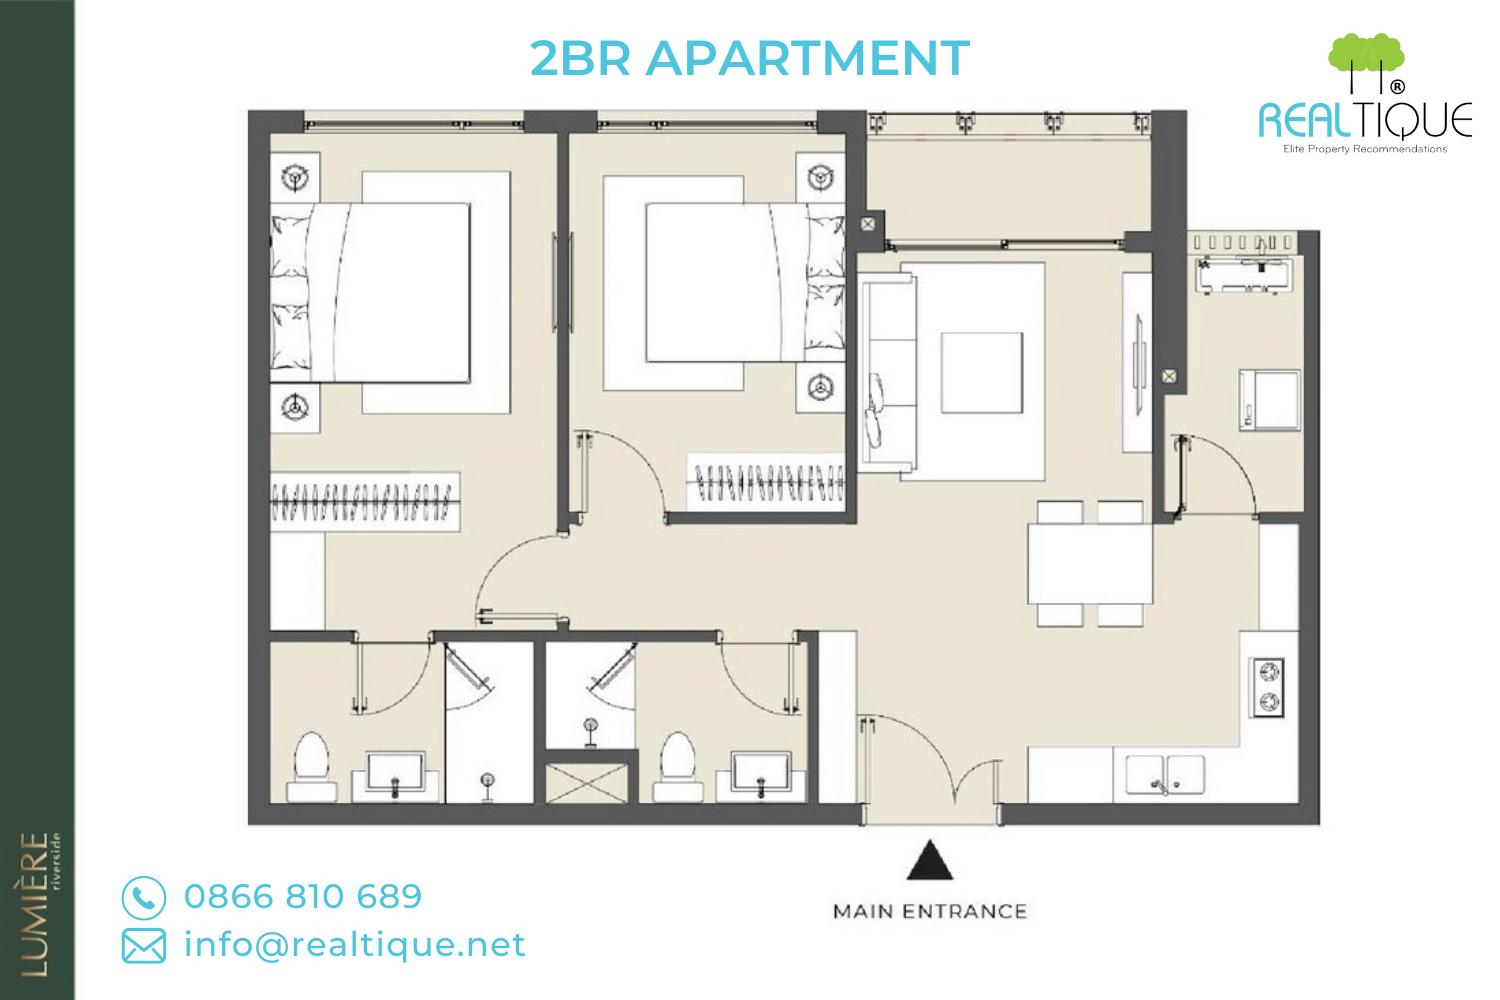 Floor plan of 2-bedrooms apartment in LUMIÈRE riverside project District 2